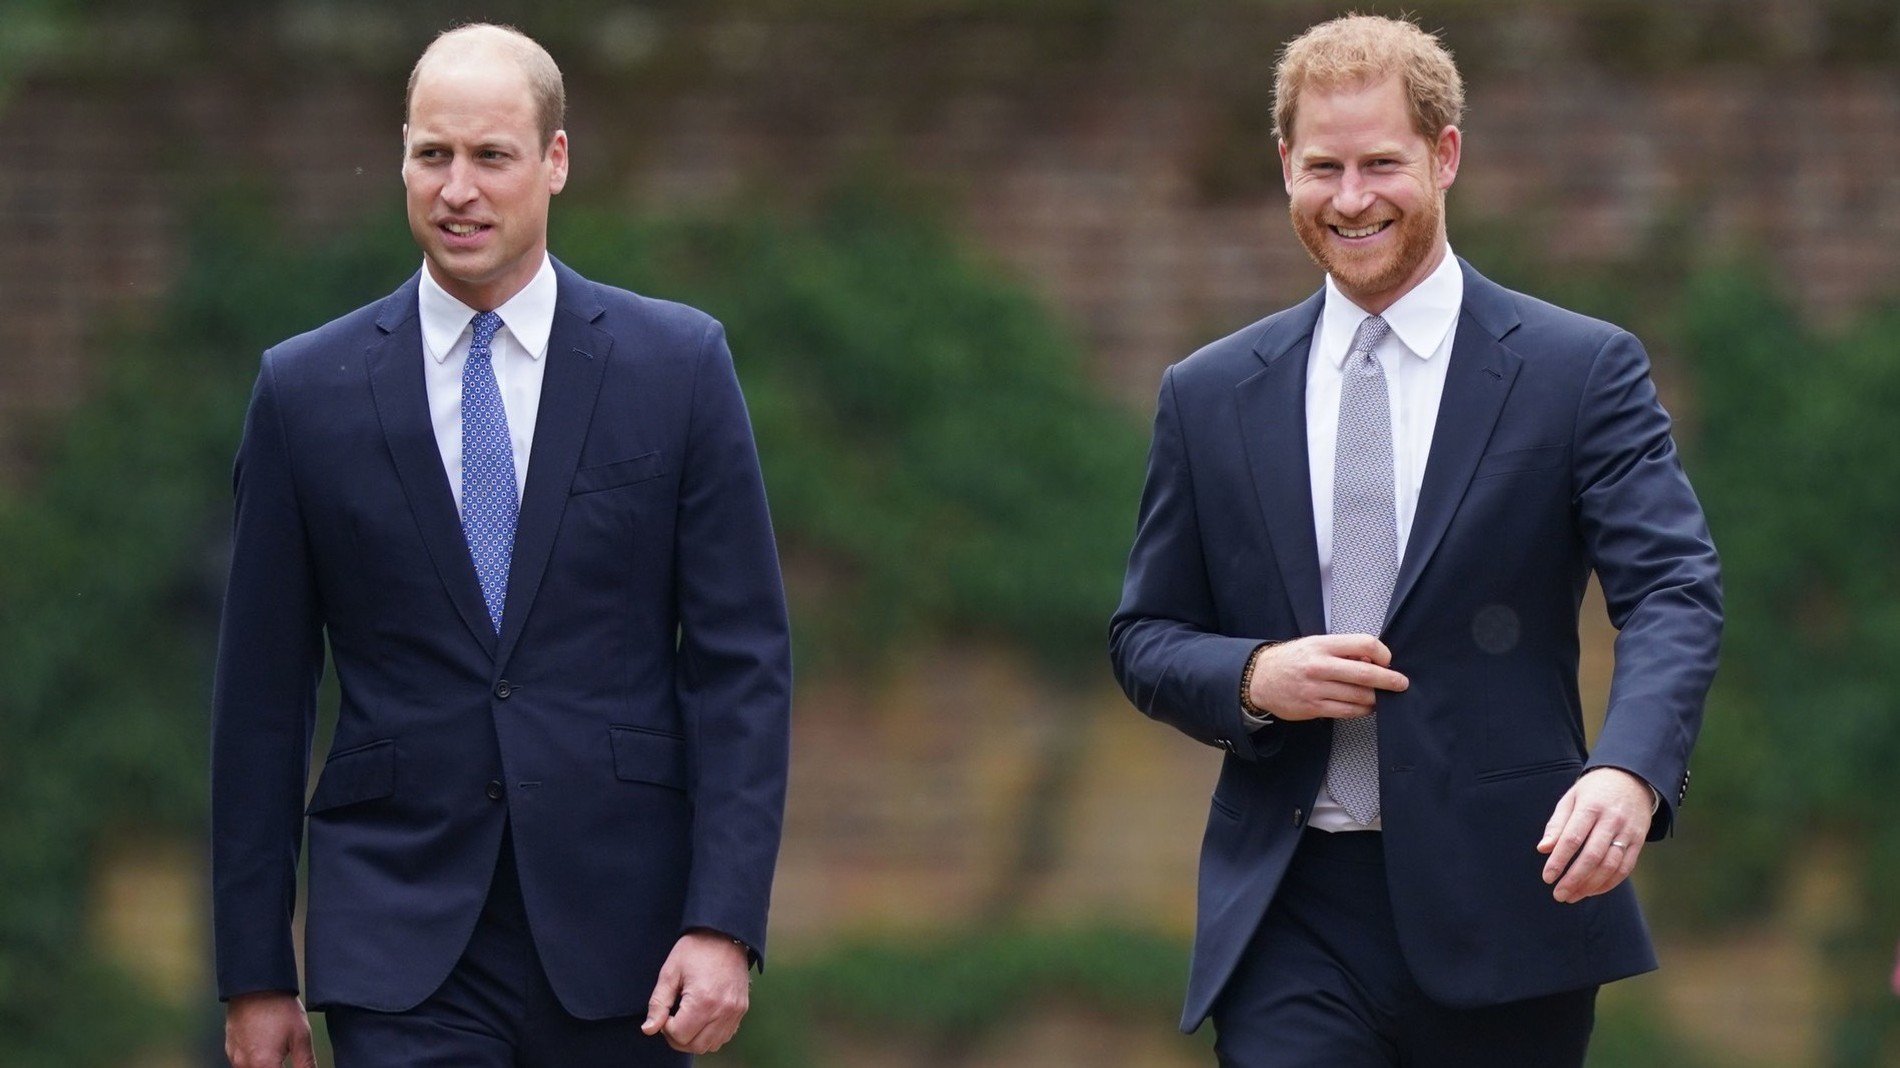 Принц Гарри и принц Уильям
Фото: Getty Images